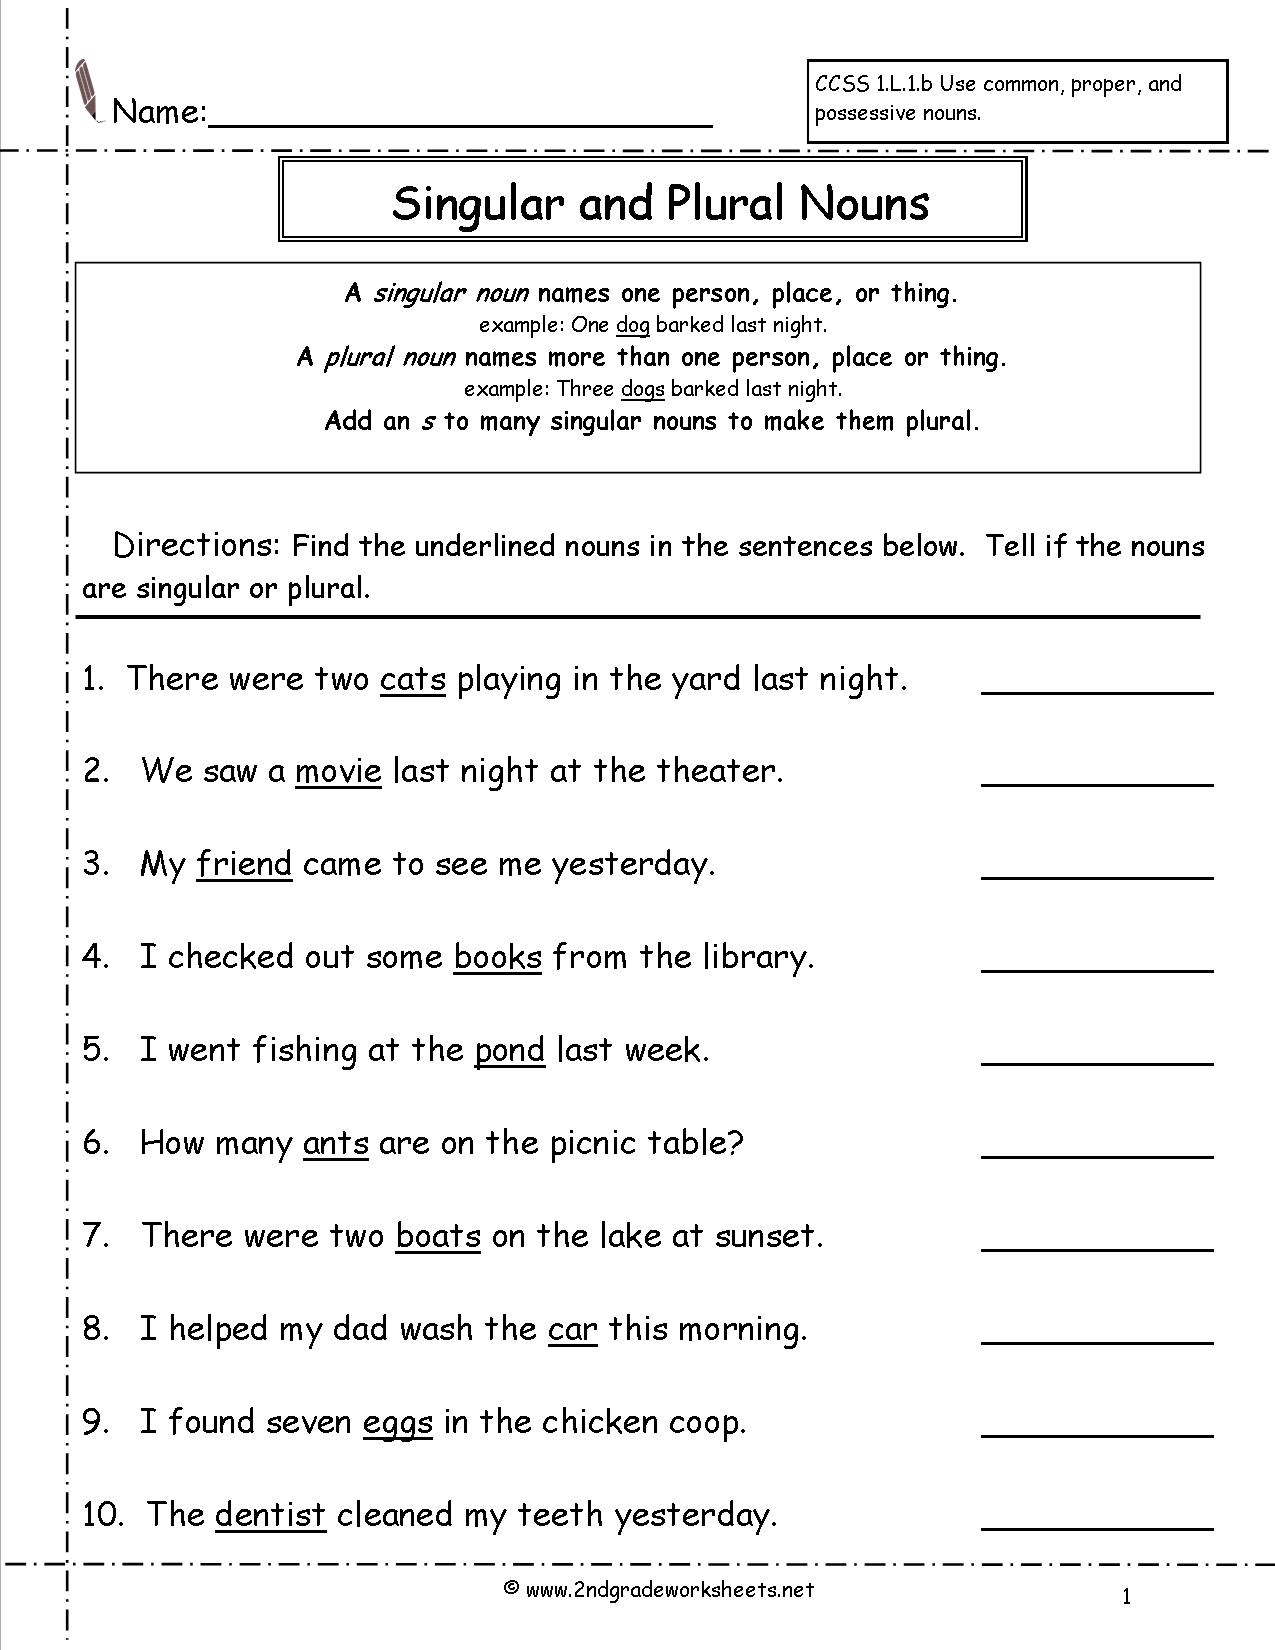 15 Best Images Of Kindergarten Verb Worksheets Free Verb Worksheets Personal Pronouns